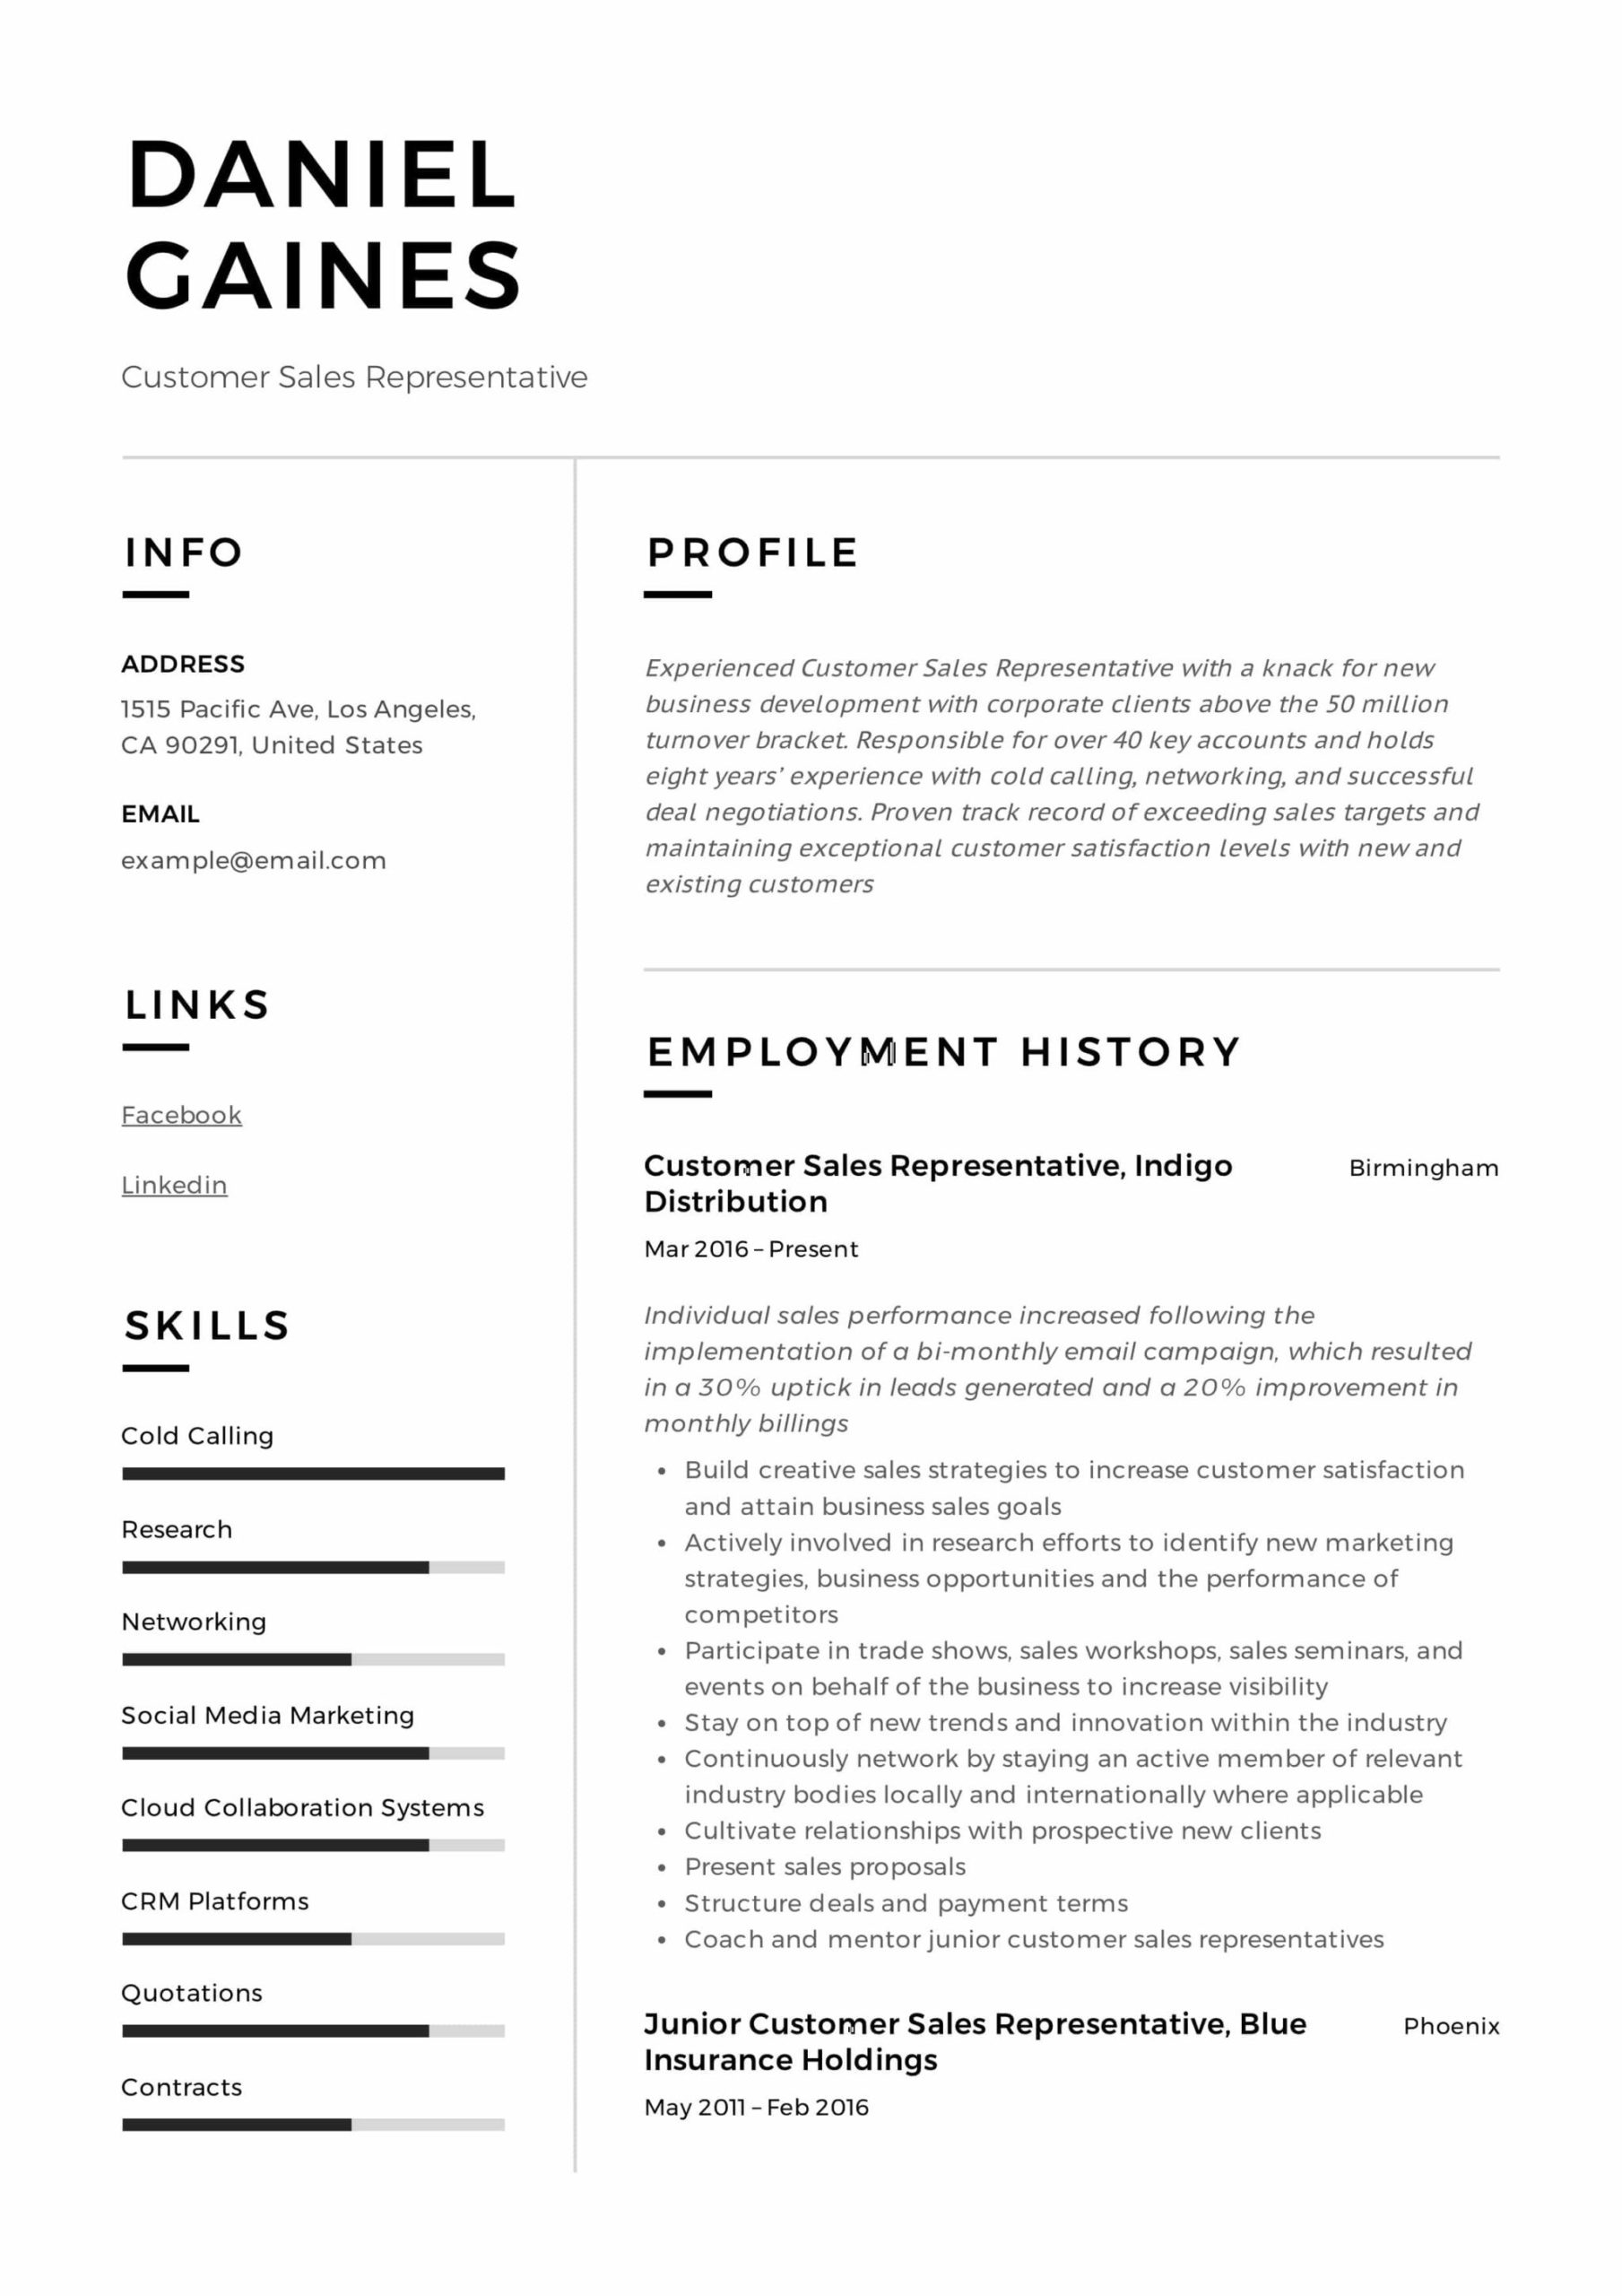 Sales Executive for Salon Equipment and Supplies Sample Resume Guide: Customer Sales Representative Resume  12 Samples Pdf 2022